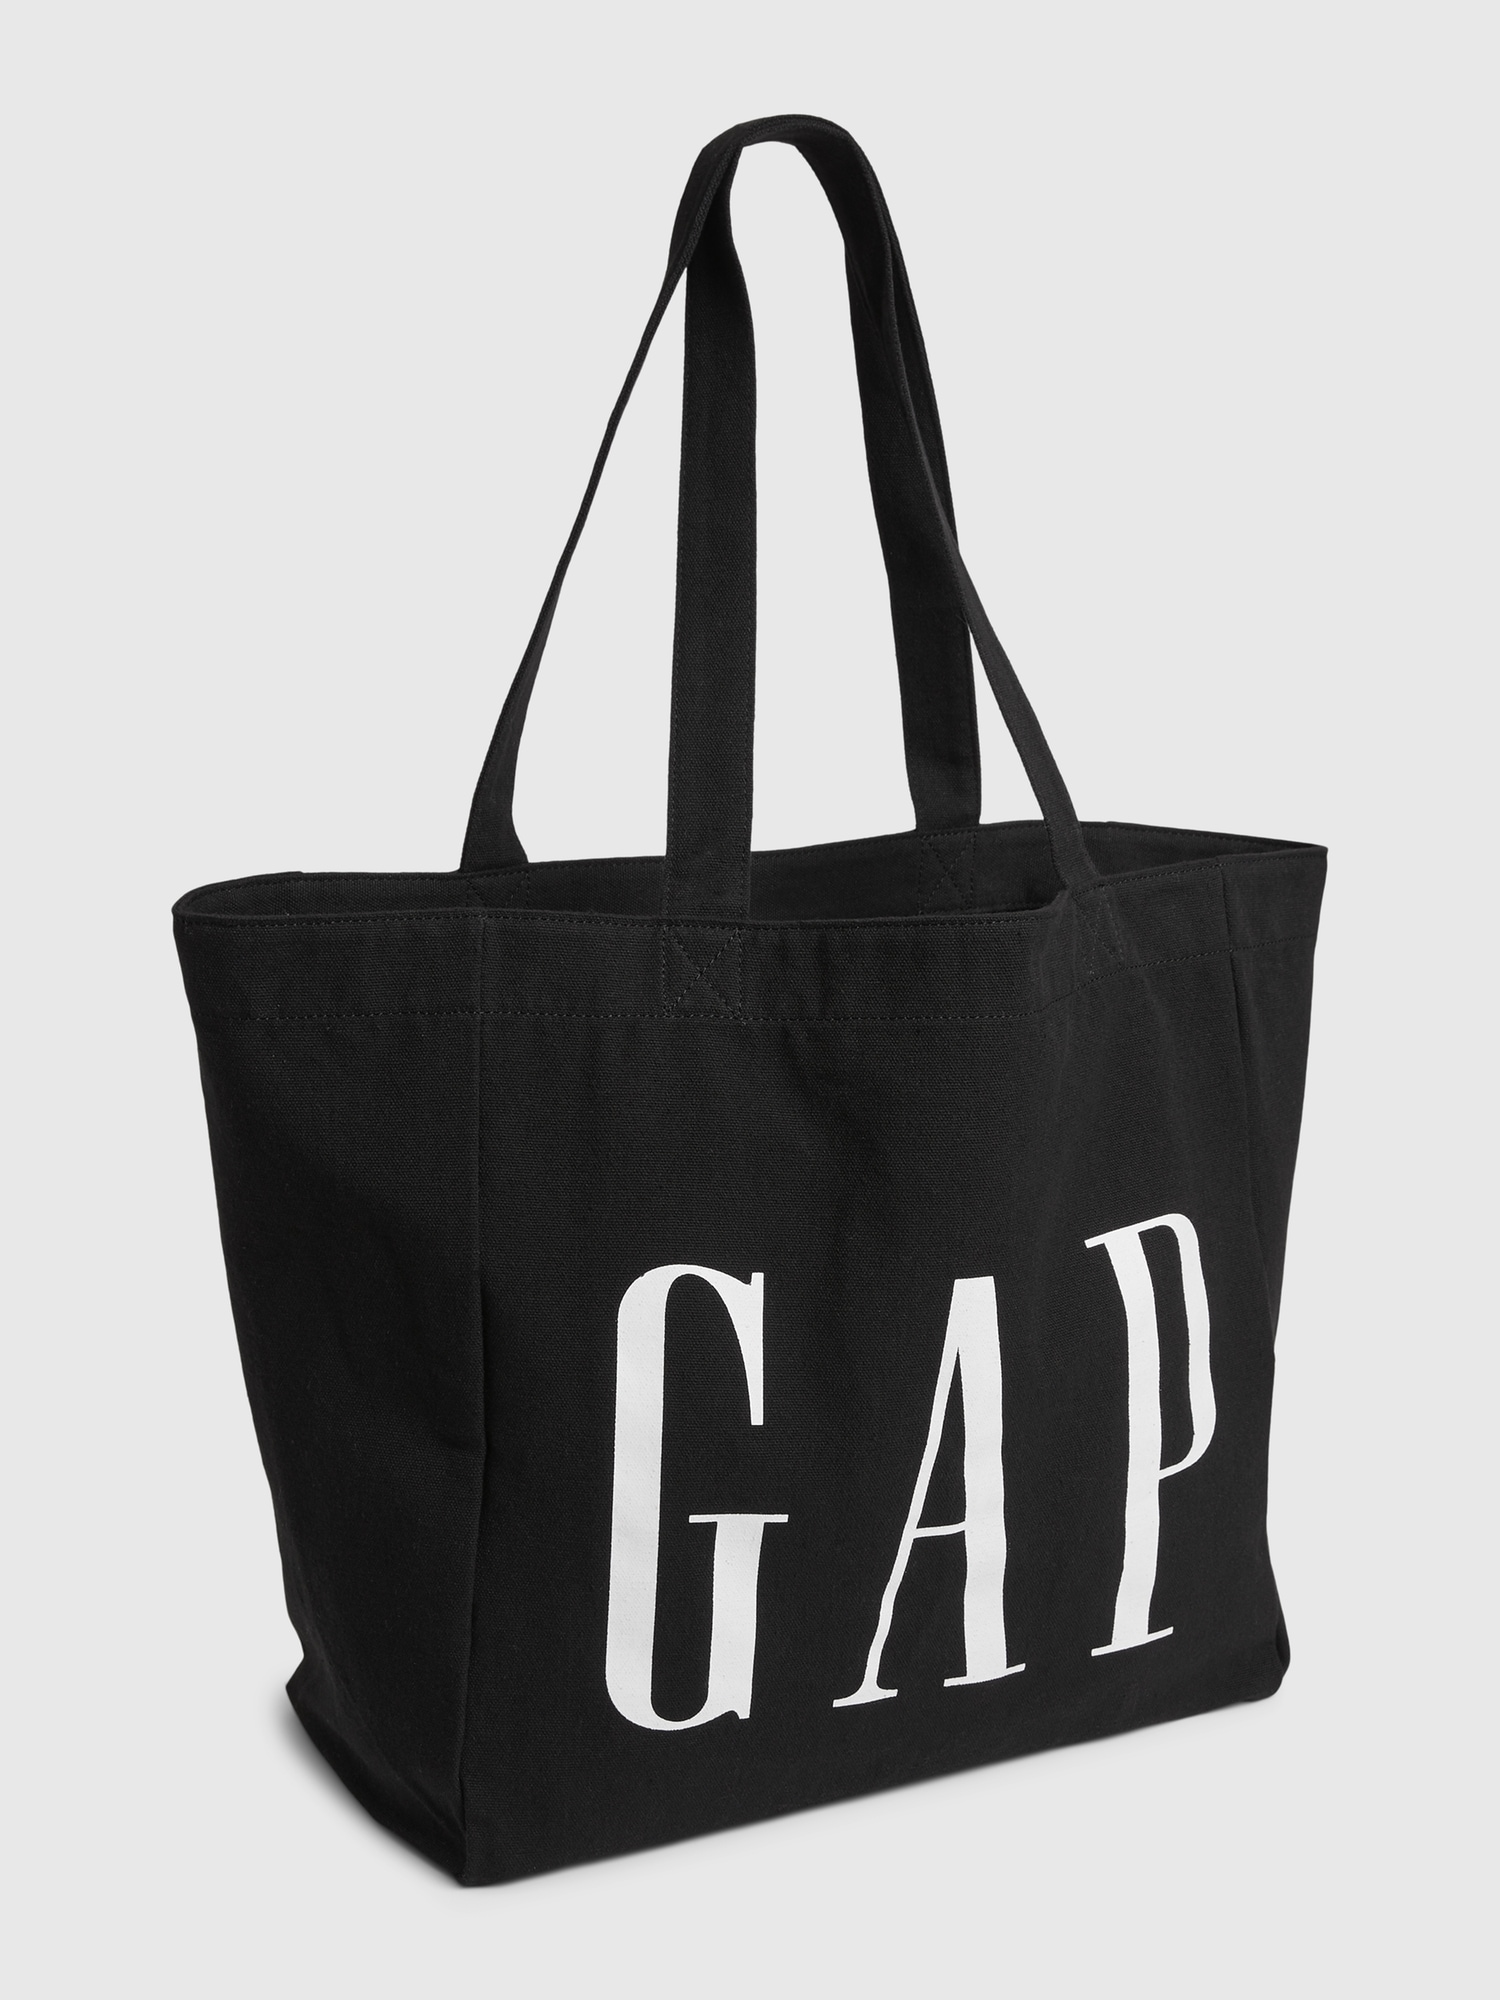 Men's Canvas Logo Tote Bag by Gap Black One Size